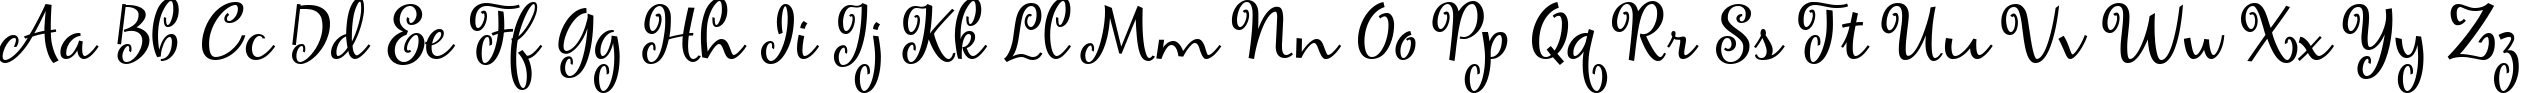 Пример написания английского алфавита шрифтом Maya